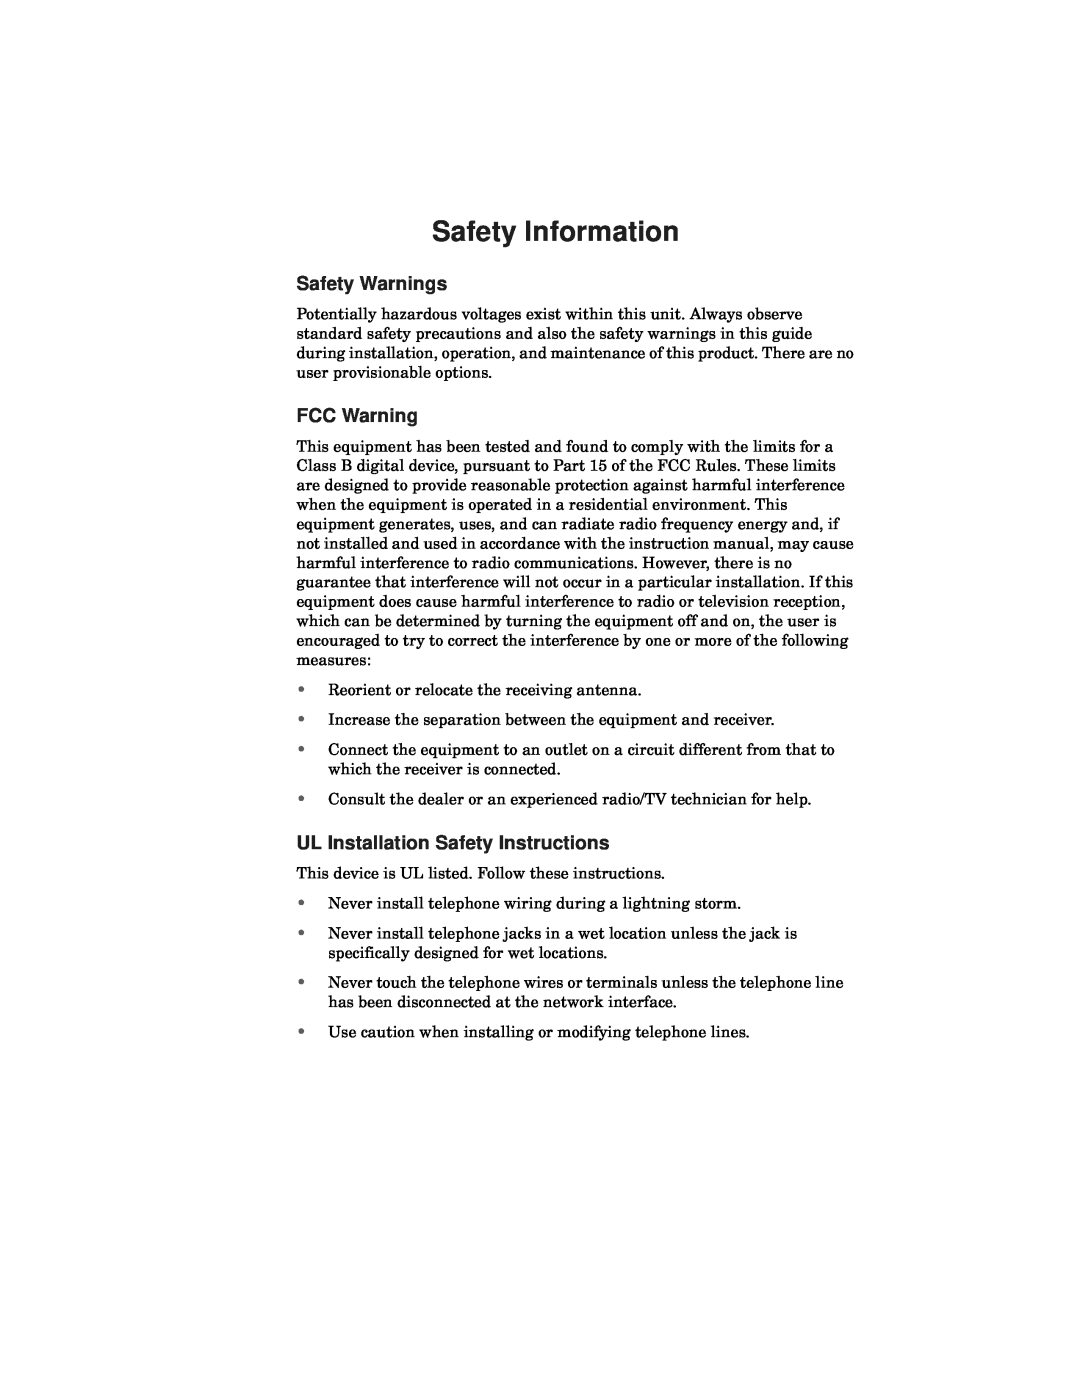 Fujitsu FC9660RA12 manual Safety Information, Safety Warnings, FCC Warning, UL Installation Safety Instructions 